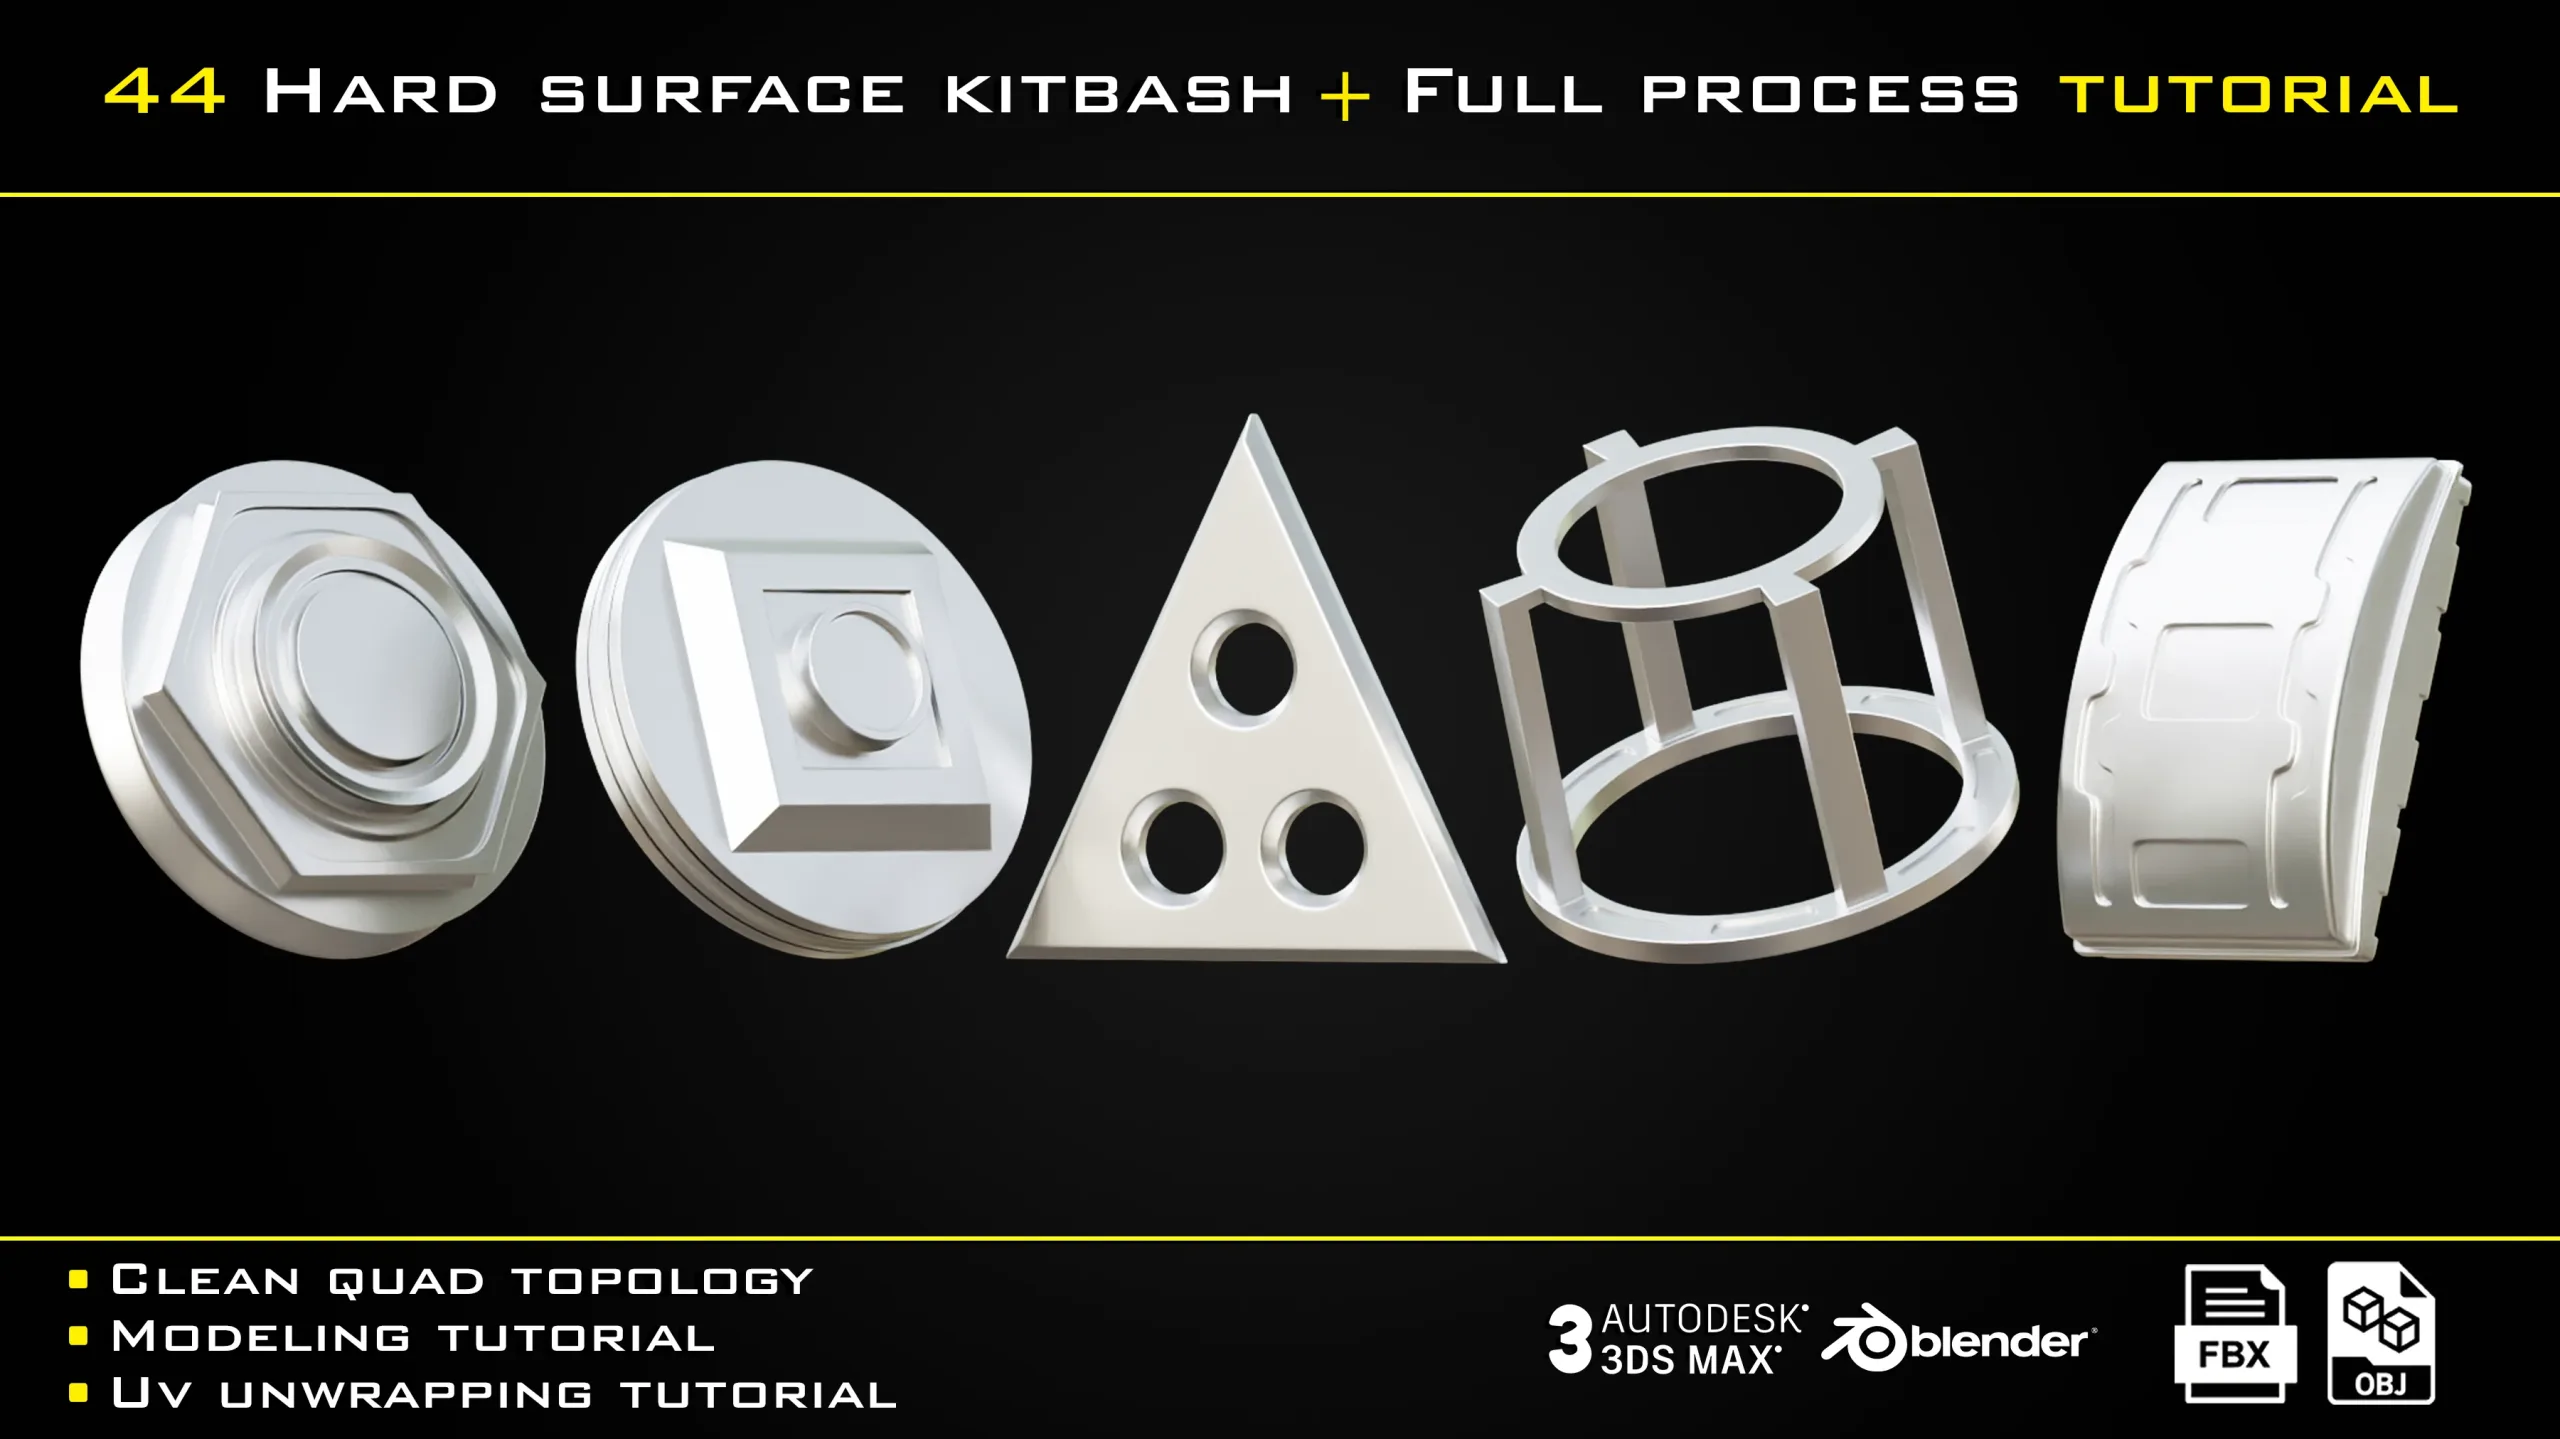 44 Hard surface kitbash + Full Process Tutorial